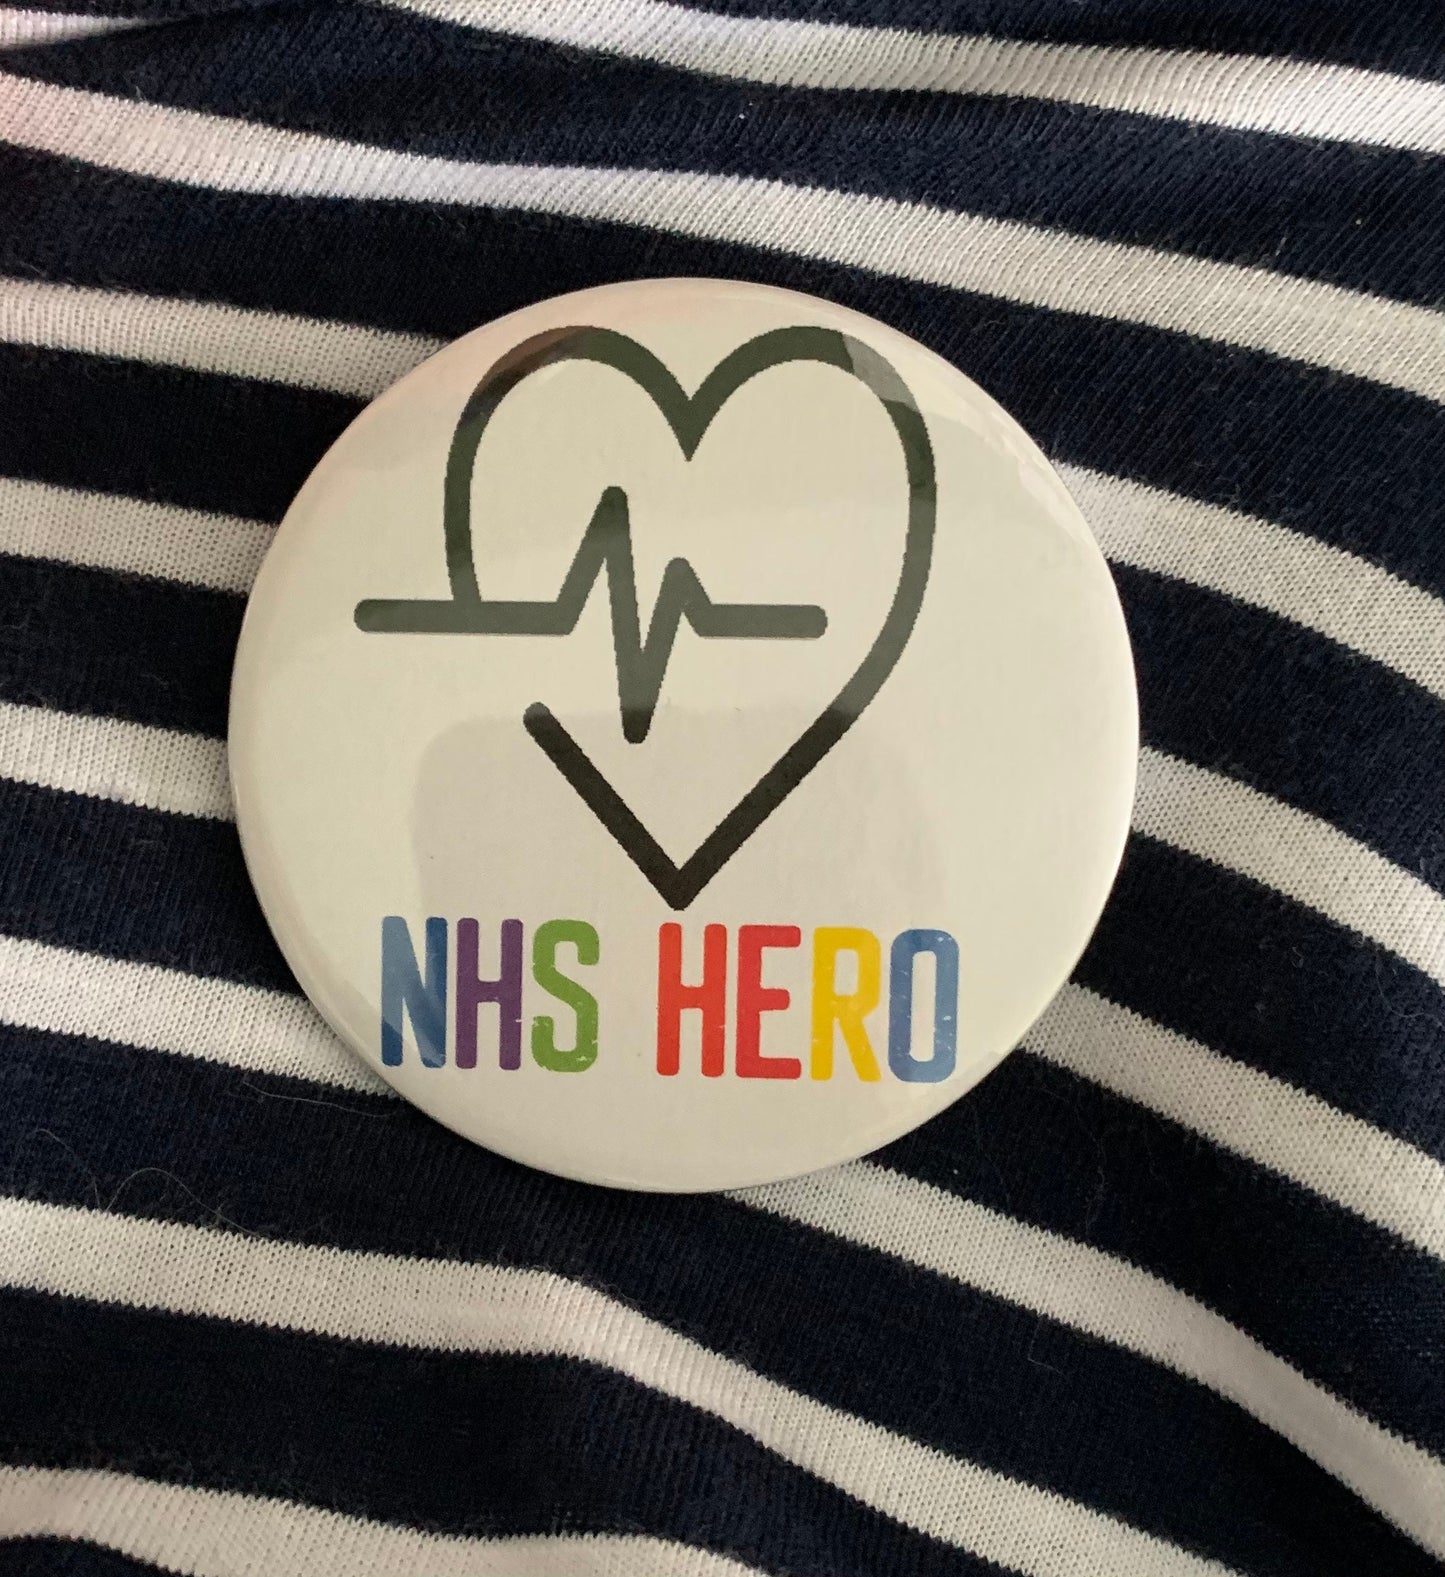 NHS hero badge, nurse badge, doctor pins, healthcare worker thank you gift, thank you nhs staff, nurse friend gift, uniform badges